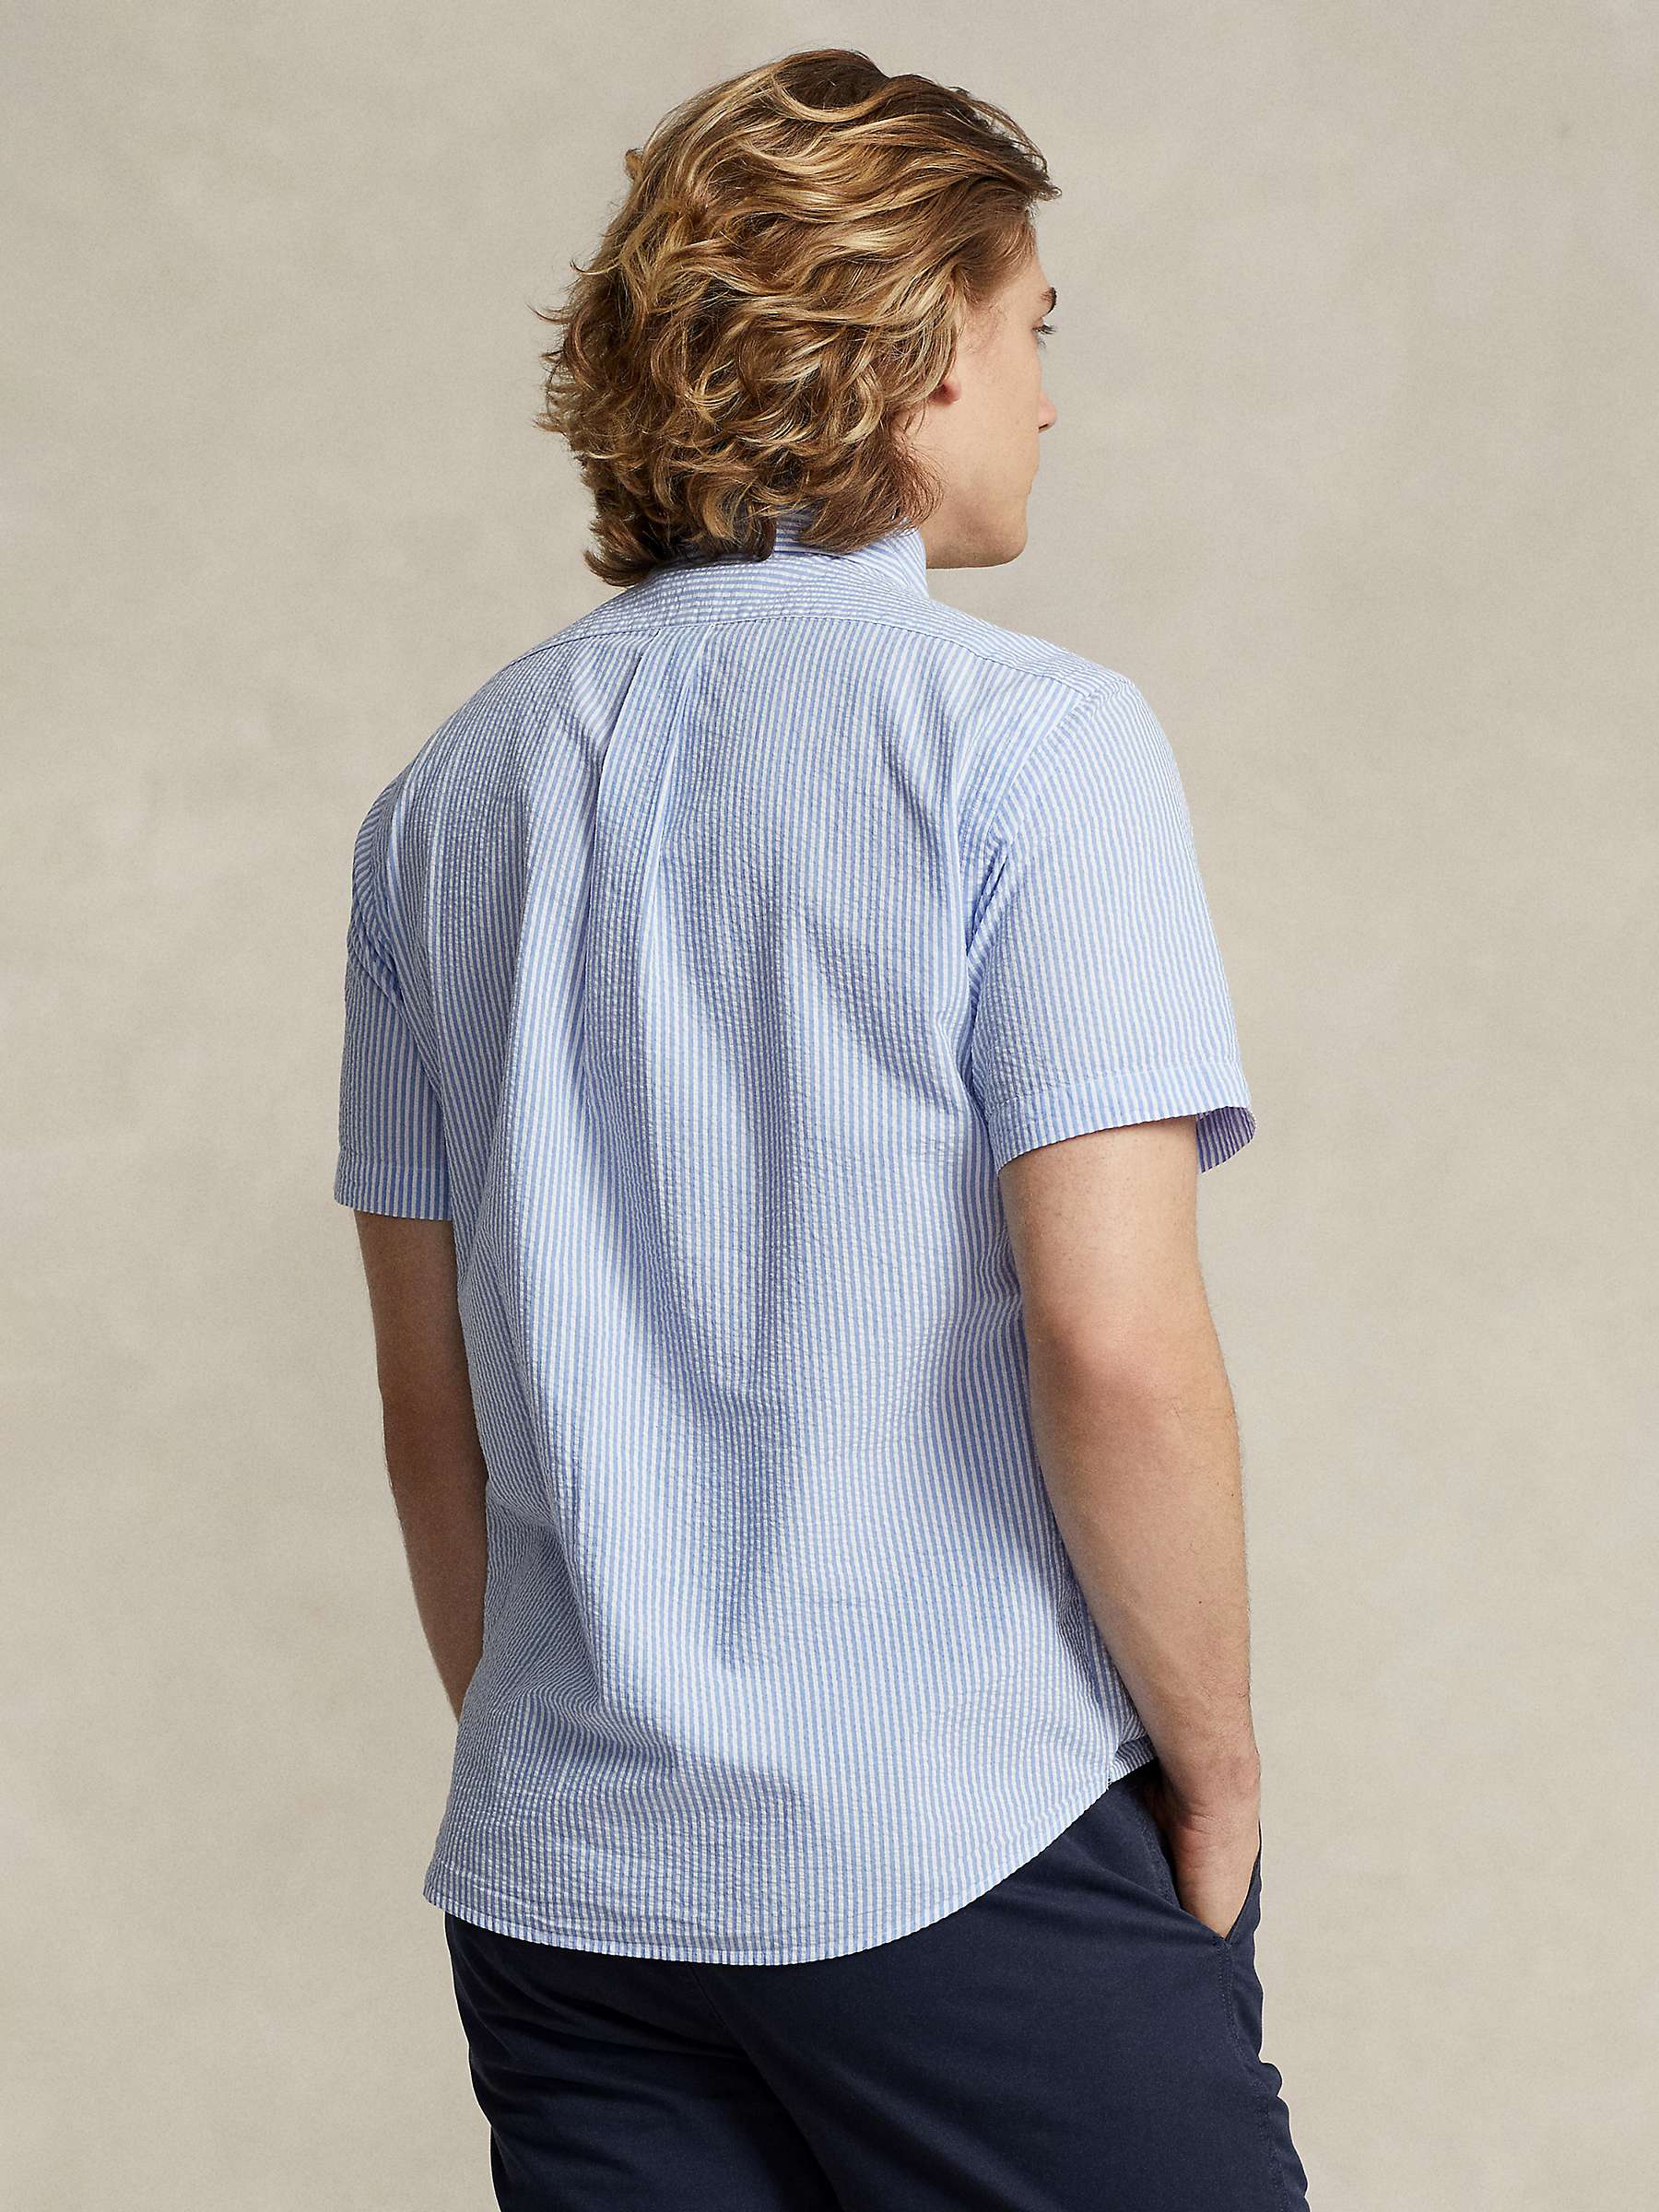 Buy Ralph Lauren Custom Fit Striped Seersucker Shirt, Blue/White Online at johnlewis.com